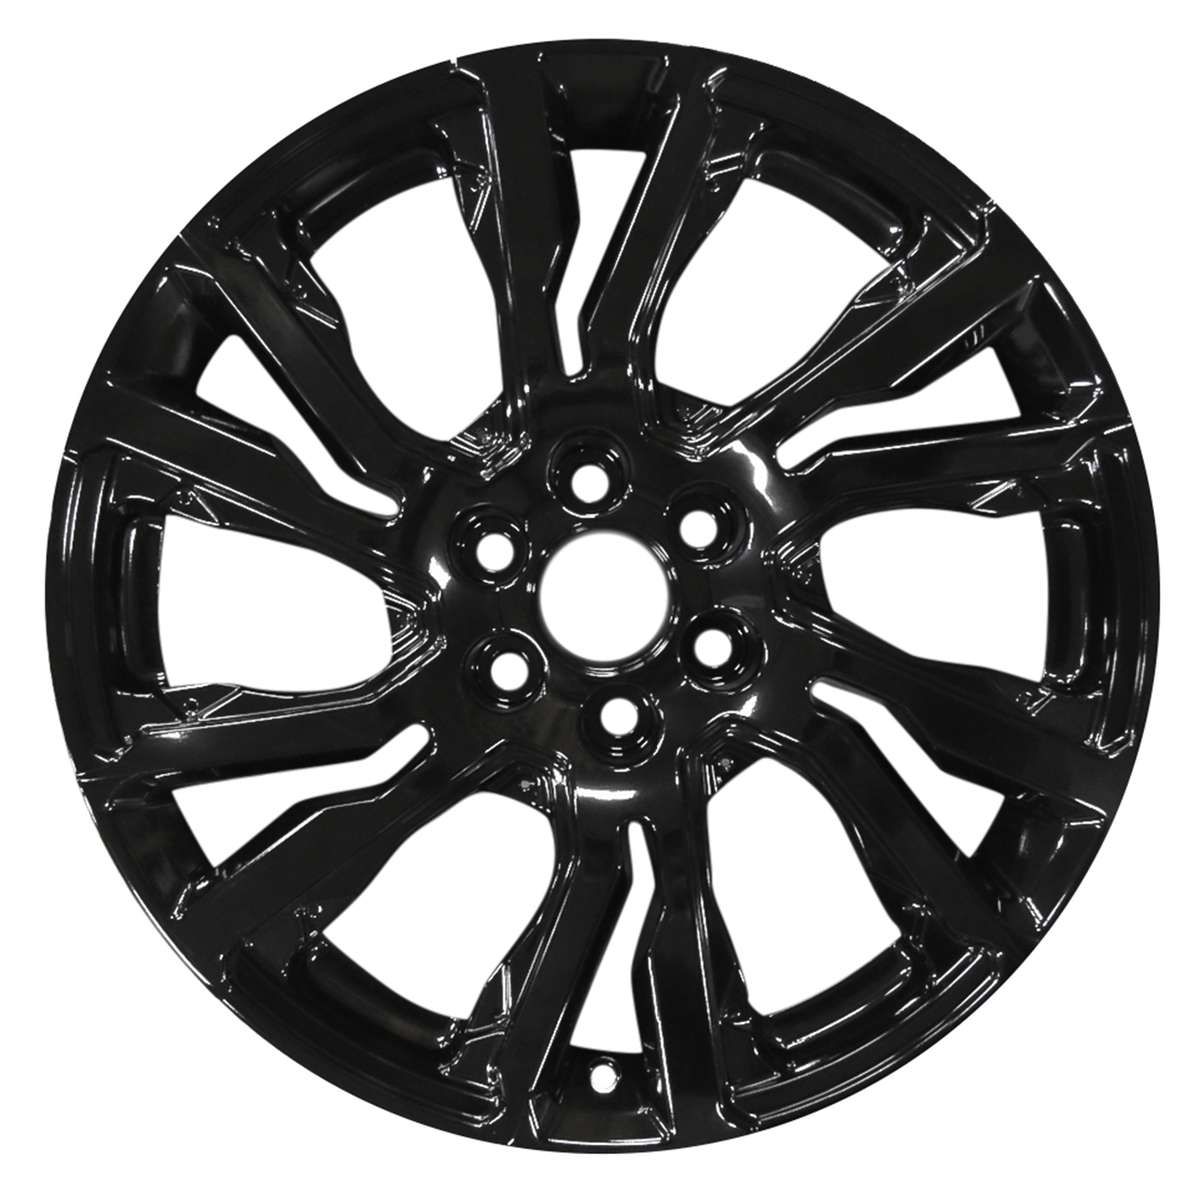 2021 GMC Yukon XL New 22" Replacement Wheel Rim RW5901B